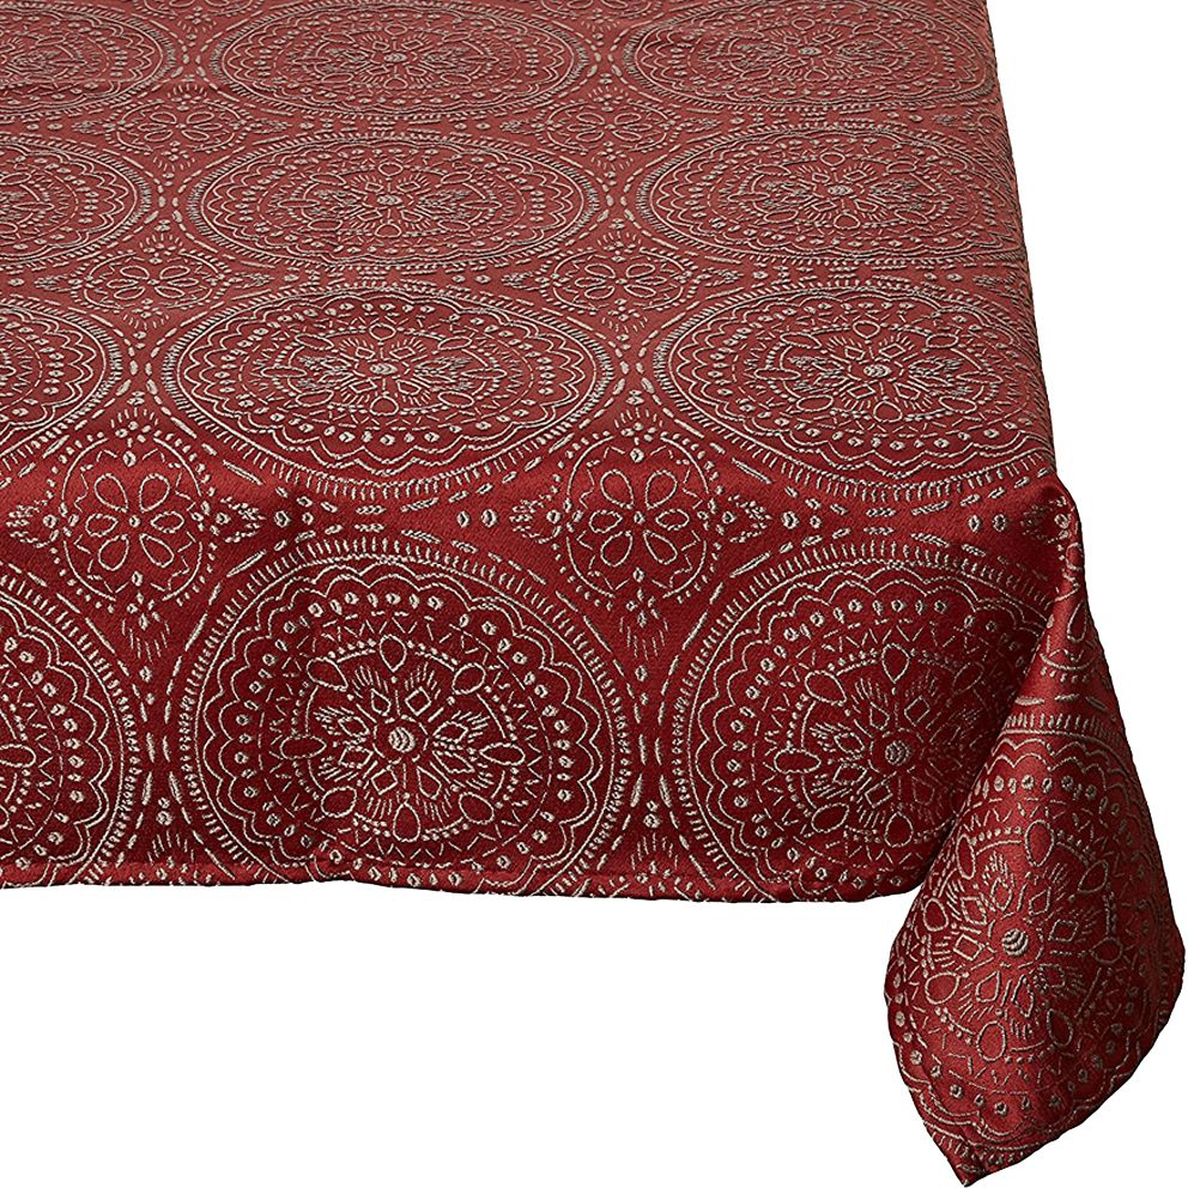 Embroidered rectangular tablecloth Kolam 140 x 140 cm